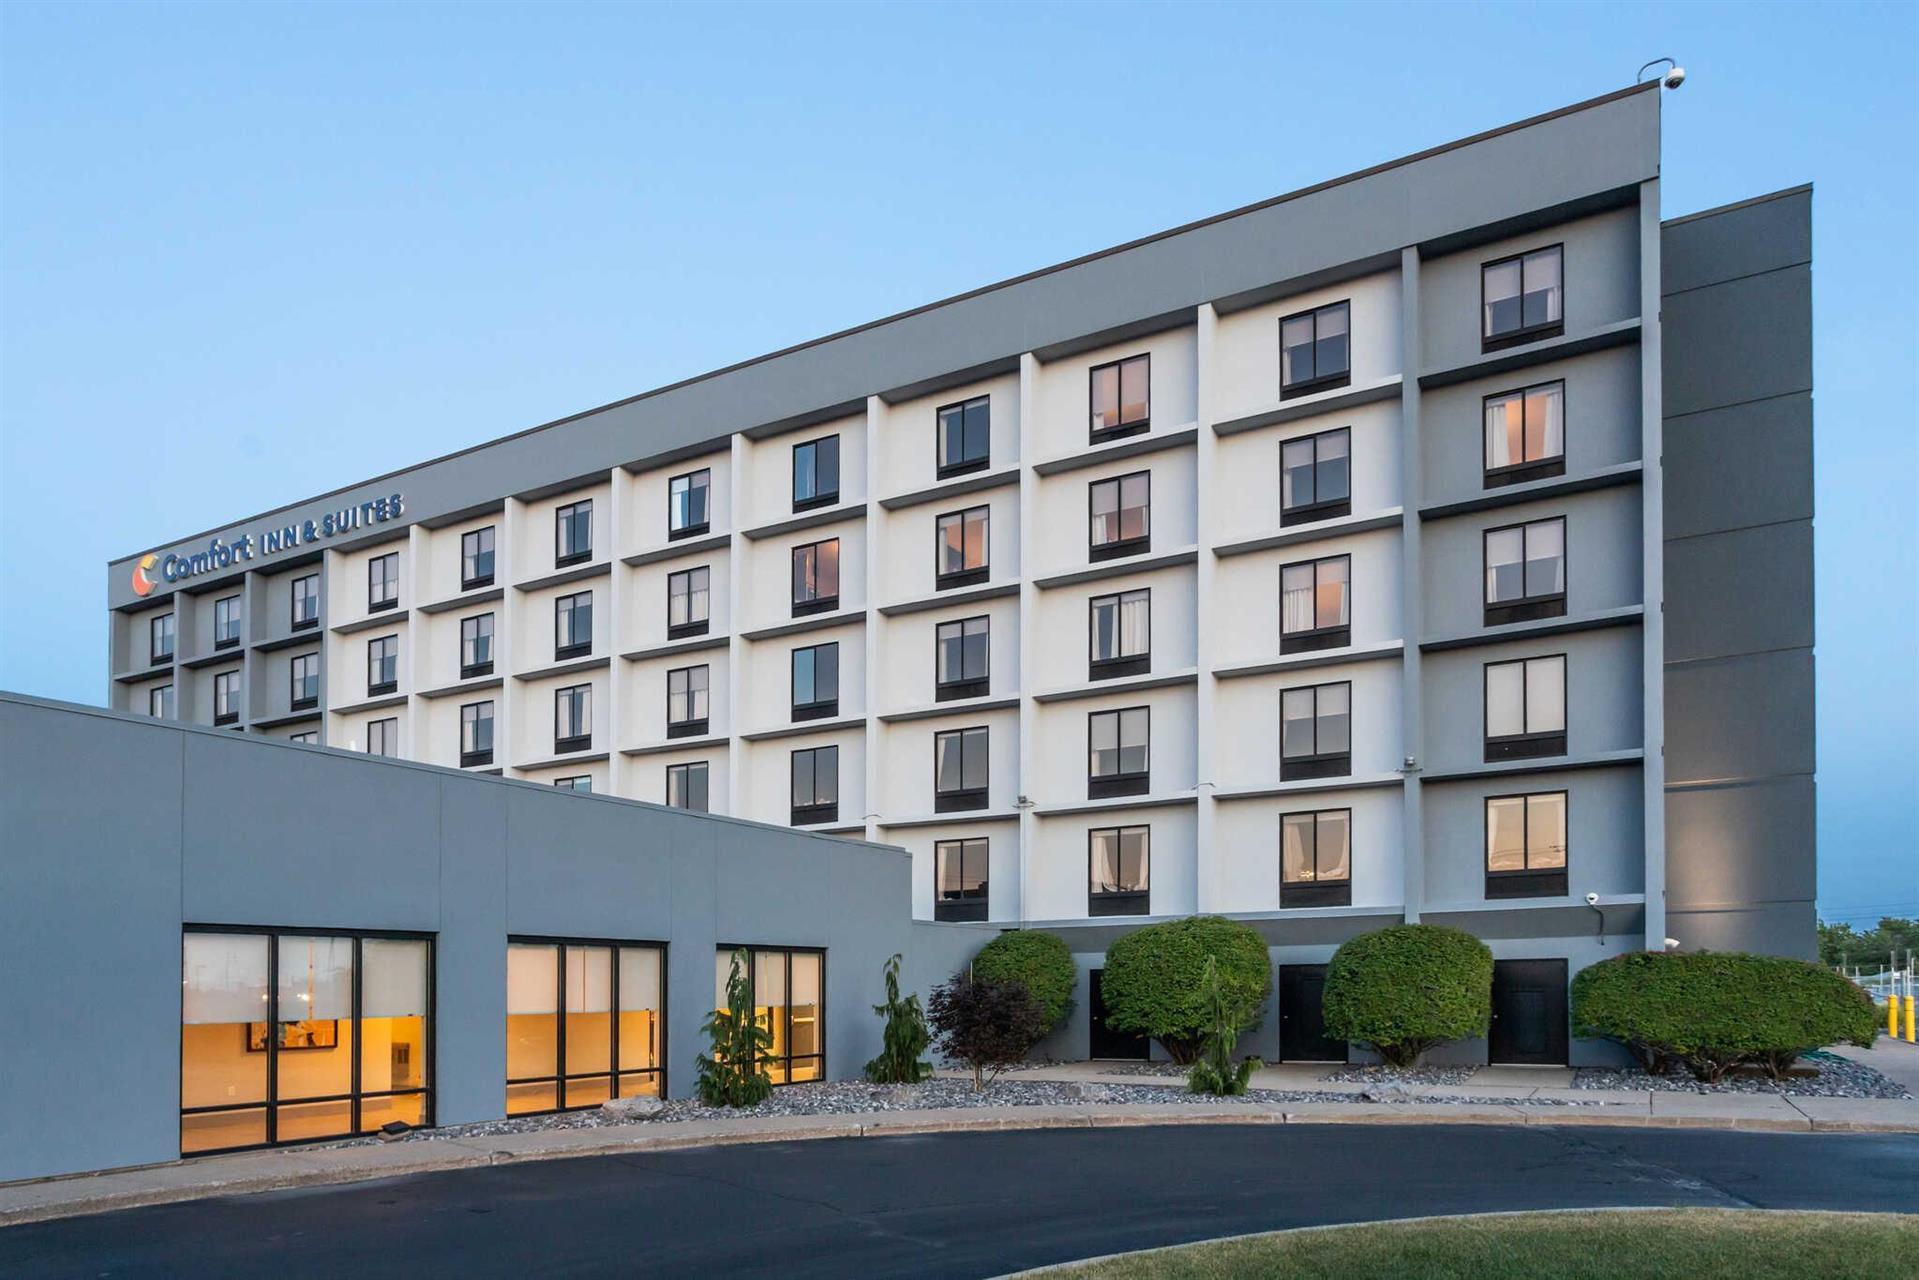 Comfort Inn & Suites Buffalo in Buffalo, NY